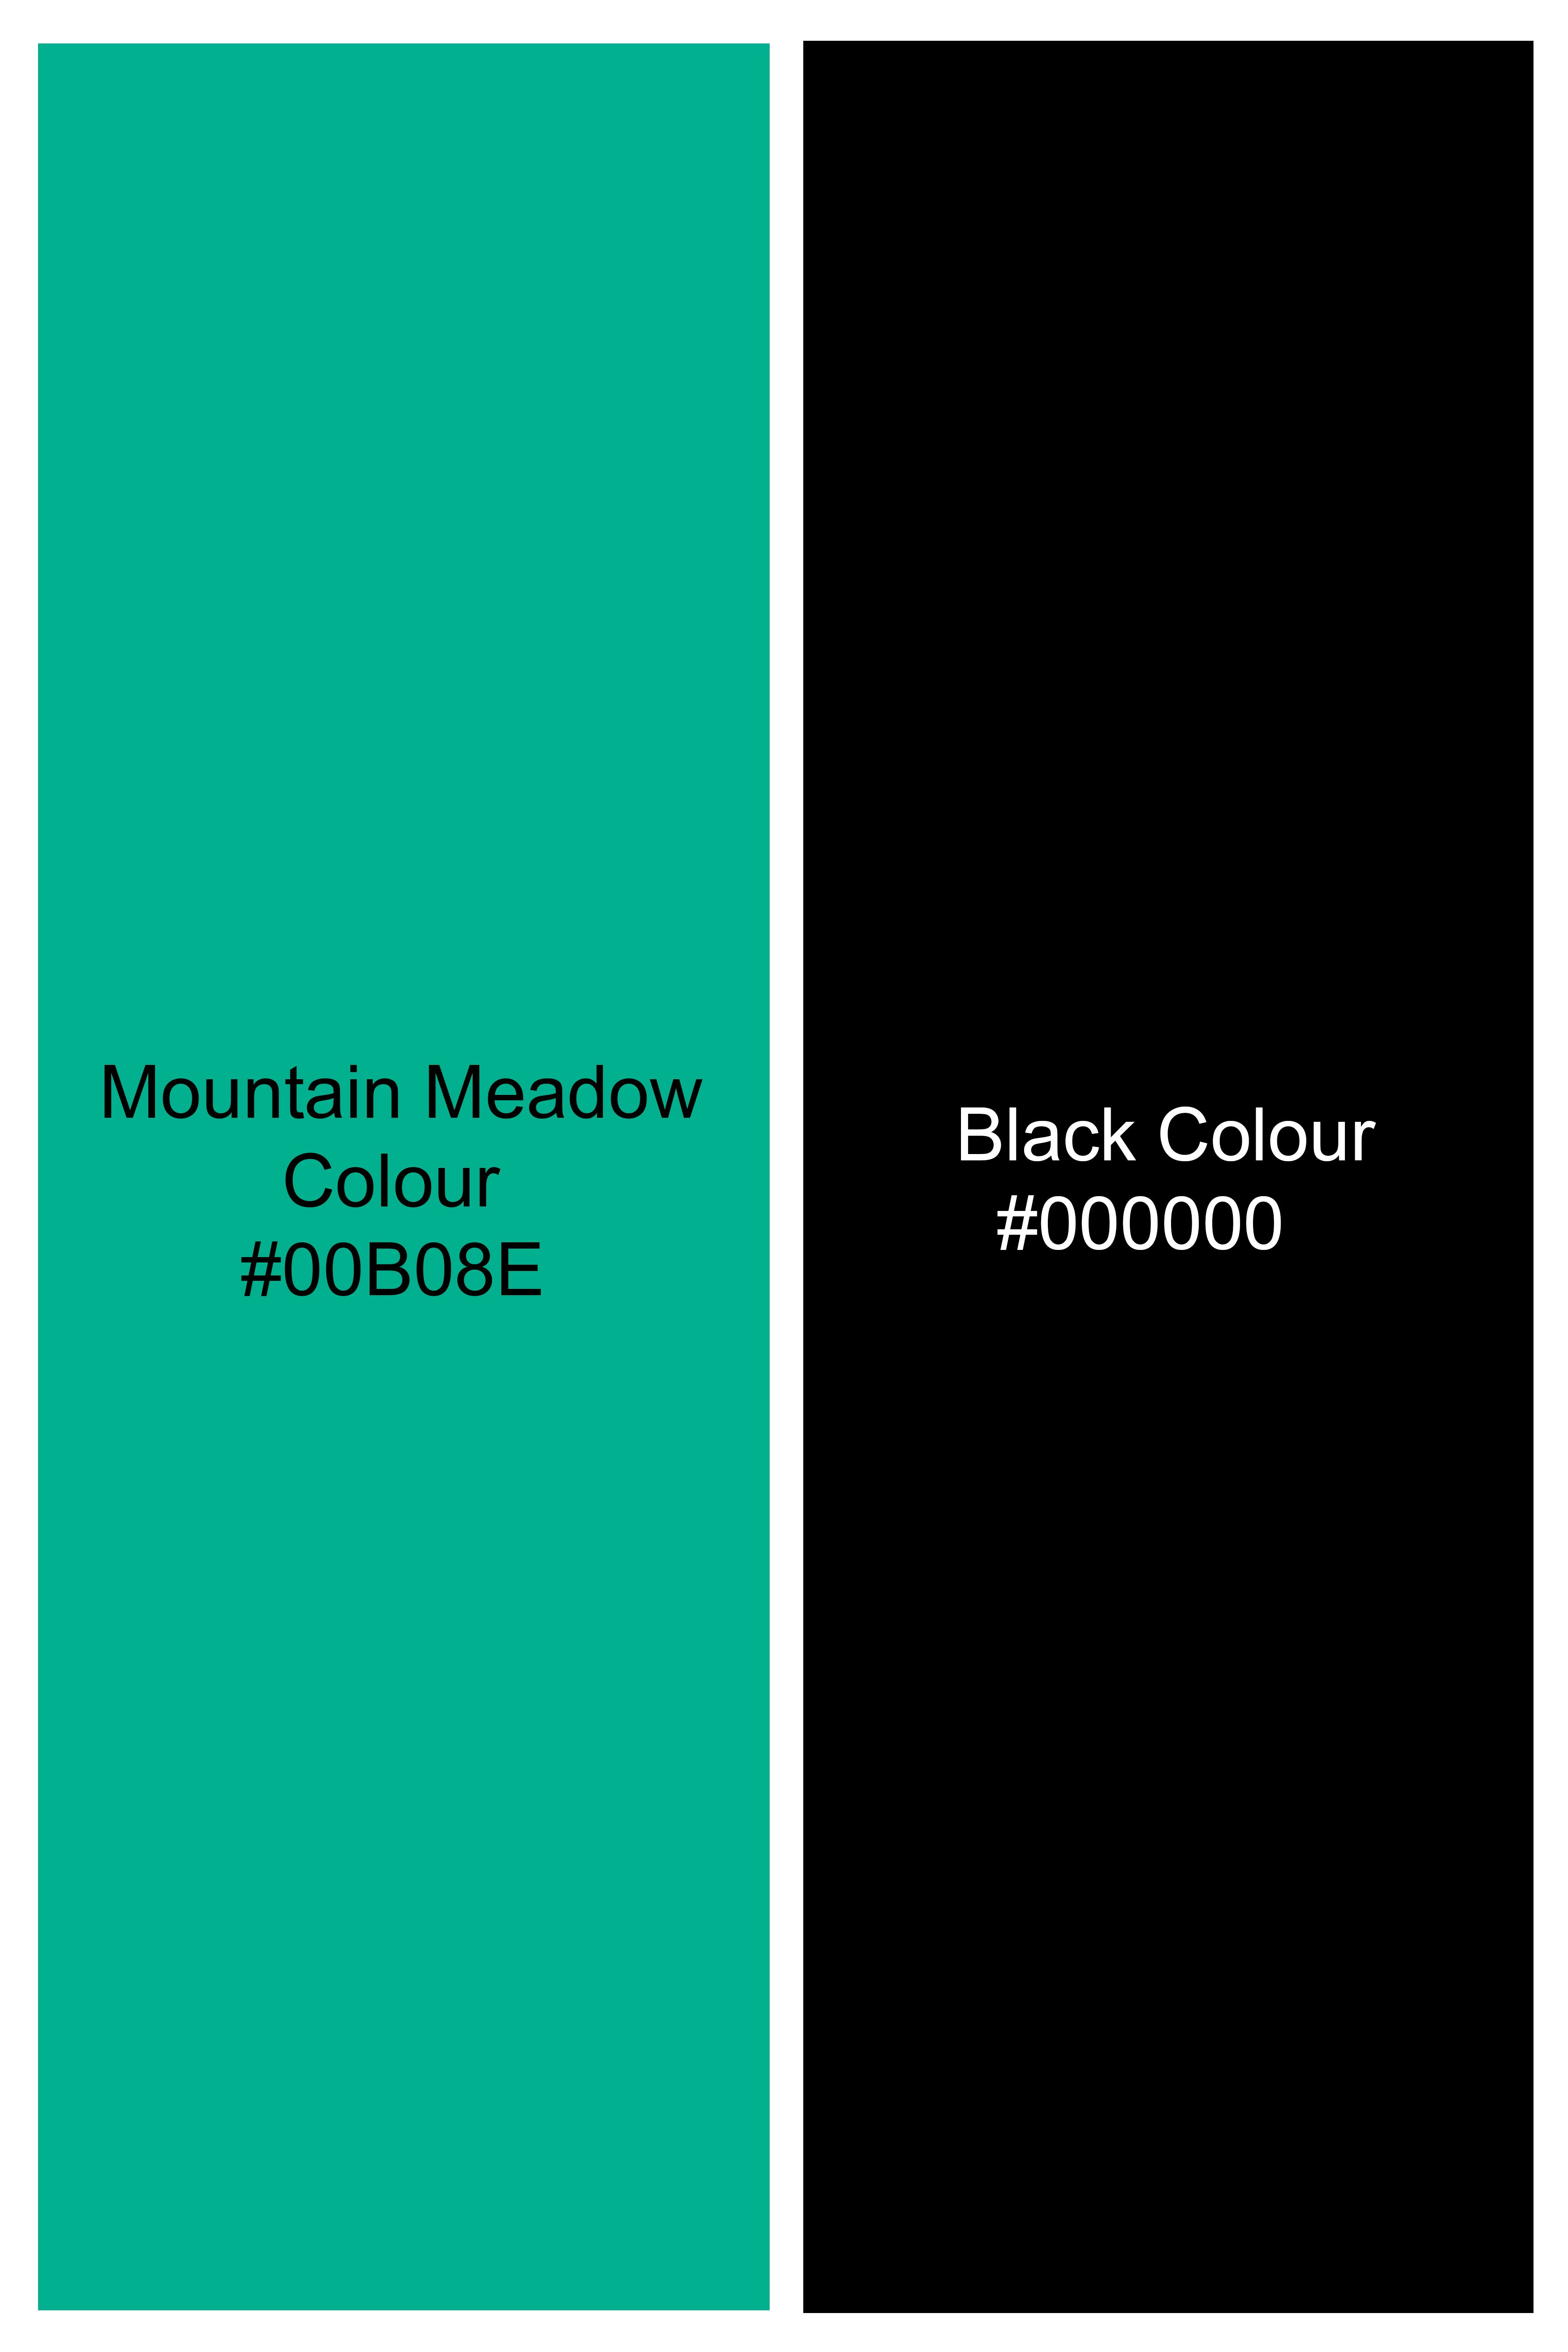 Mountain Meadow Green and Black Premium Cotton Jersey T-Shirt TS911-S, TS911-M, TS911-L, TS911-XL, TS911-XXL